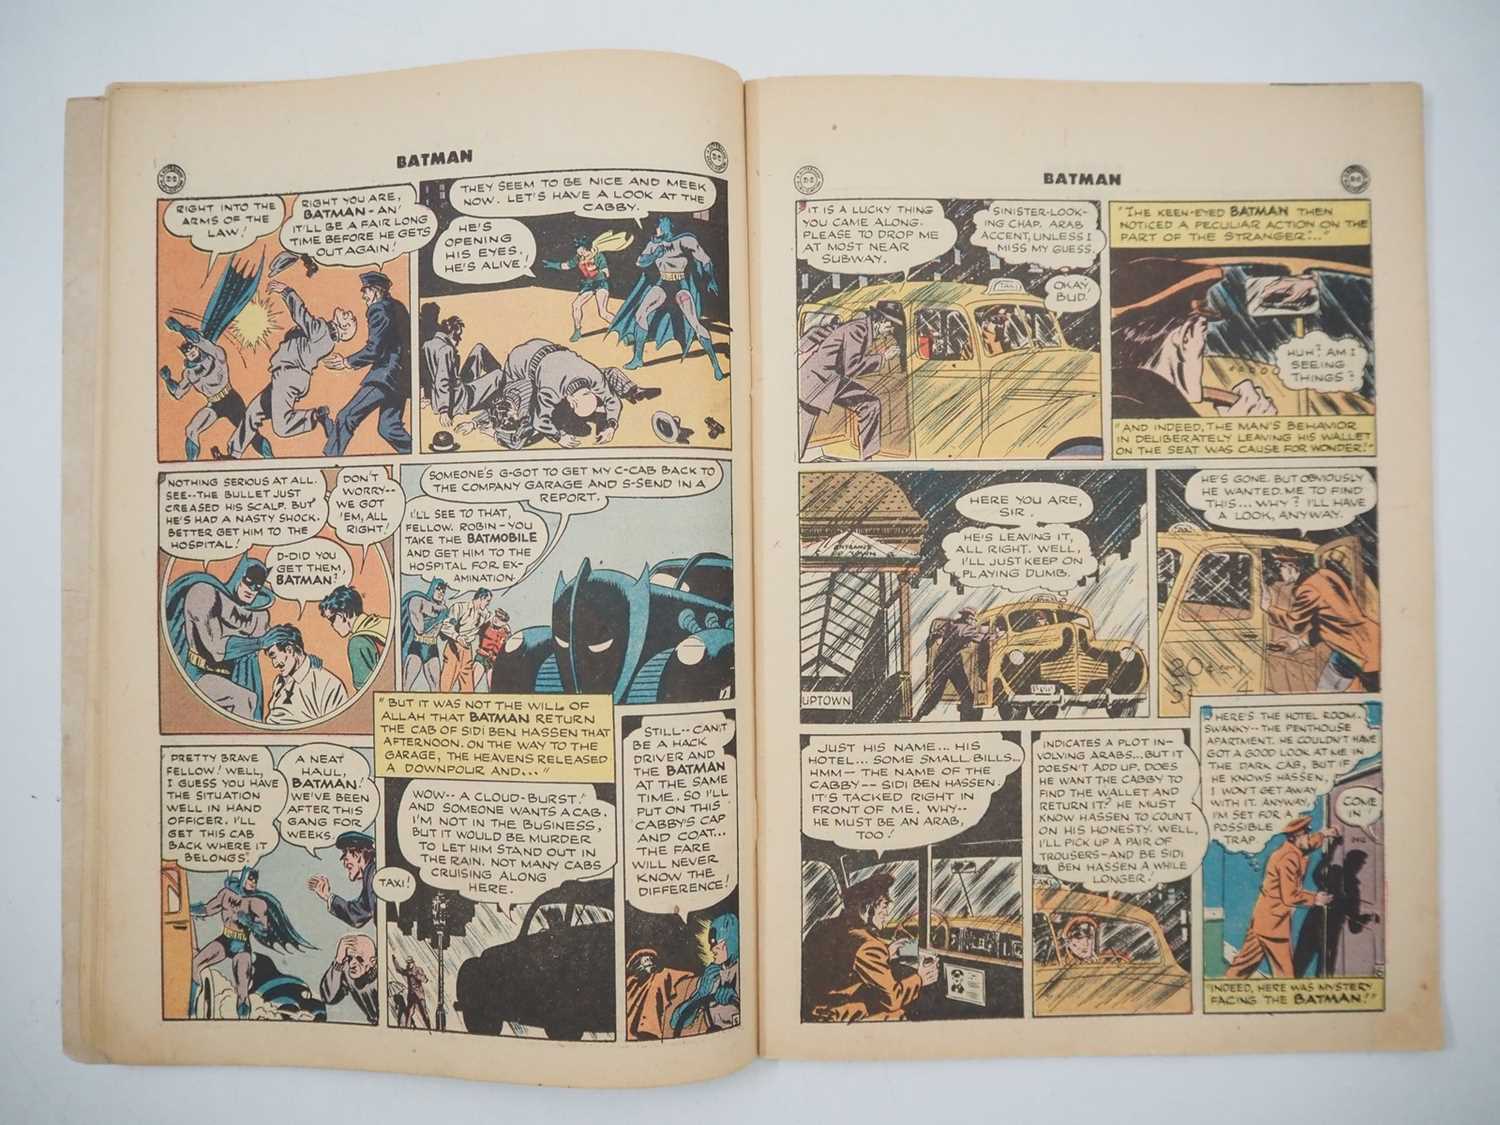 BATMAN #25 (1944 - DC) - First time that two major Batman villains (Joker and Penguin) team-up - - Image 13 of 37